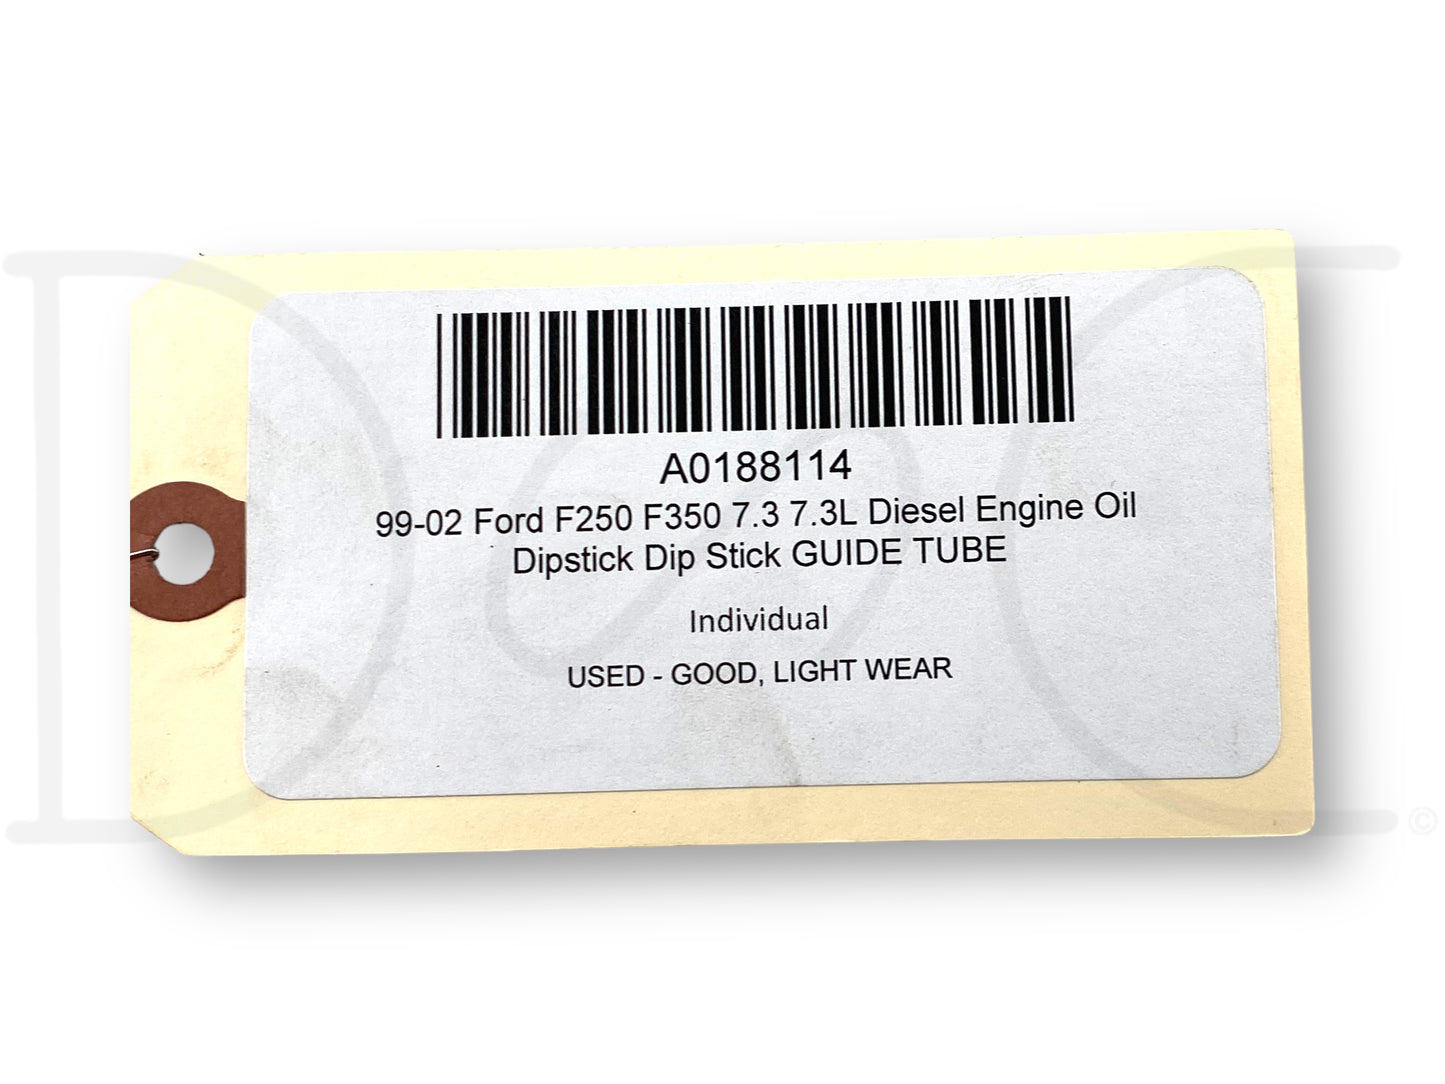 99-02 Ford F250 F350 7.3 7.3L Diesel Engine Oil Dipstick Dip Stick Guide Tube